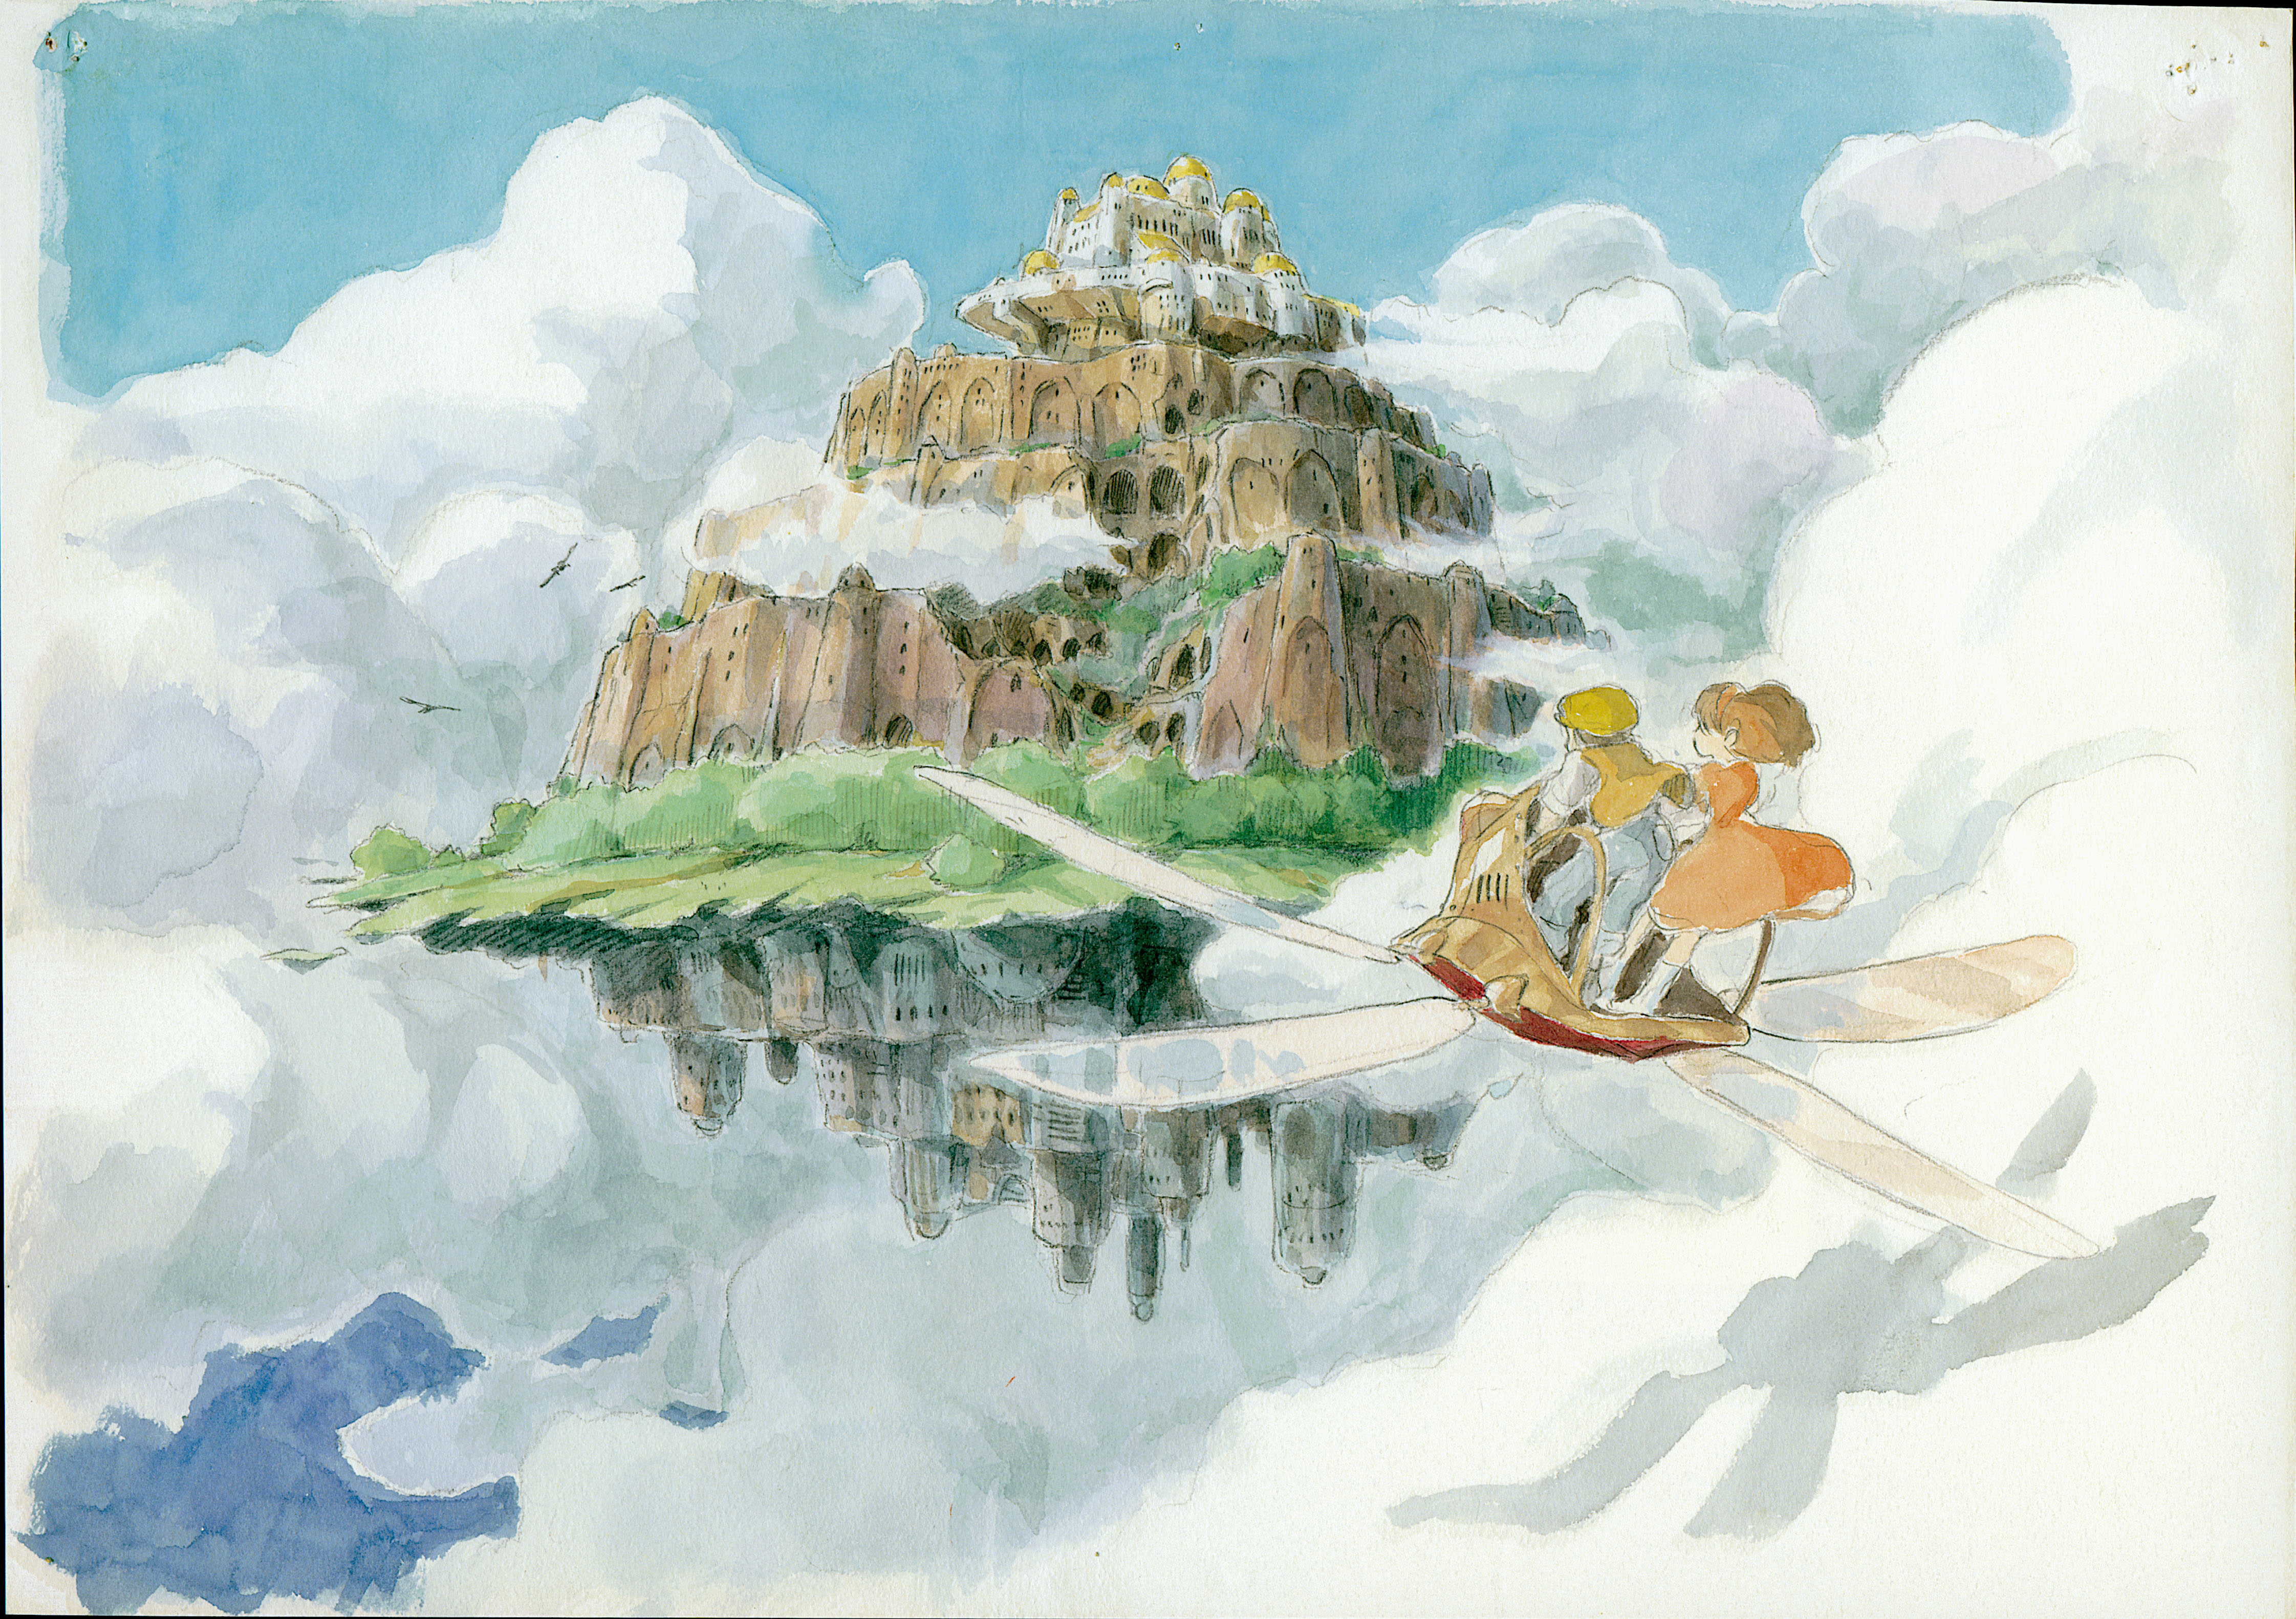 studio ghibli, laputa: castle in the sky, drawing, anime